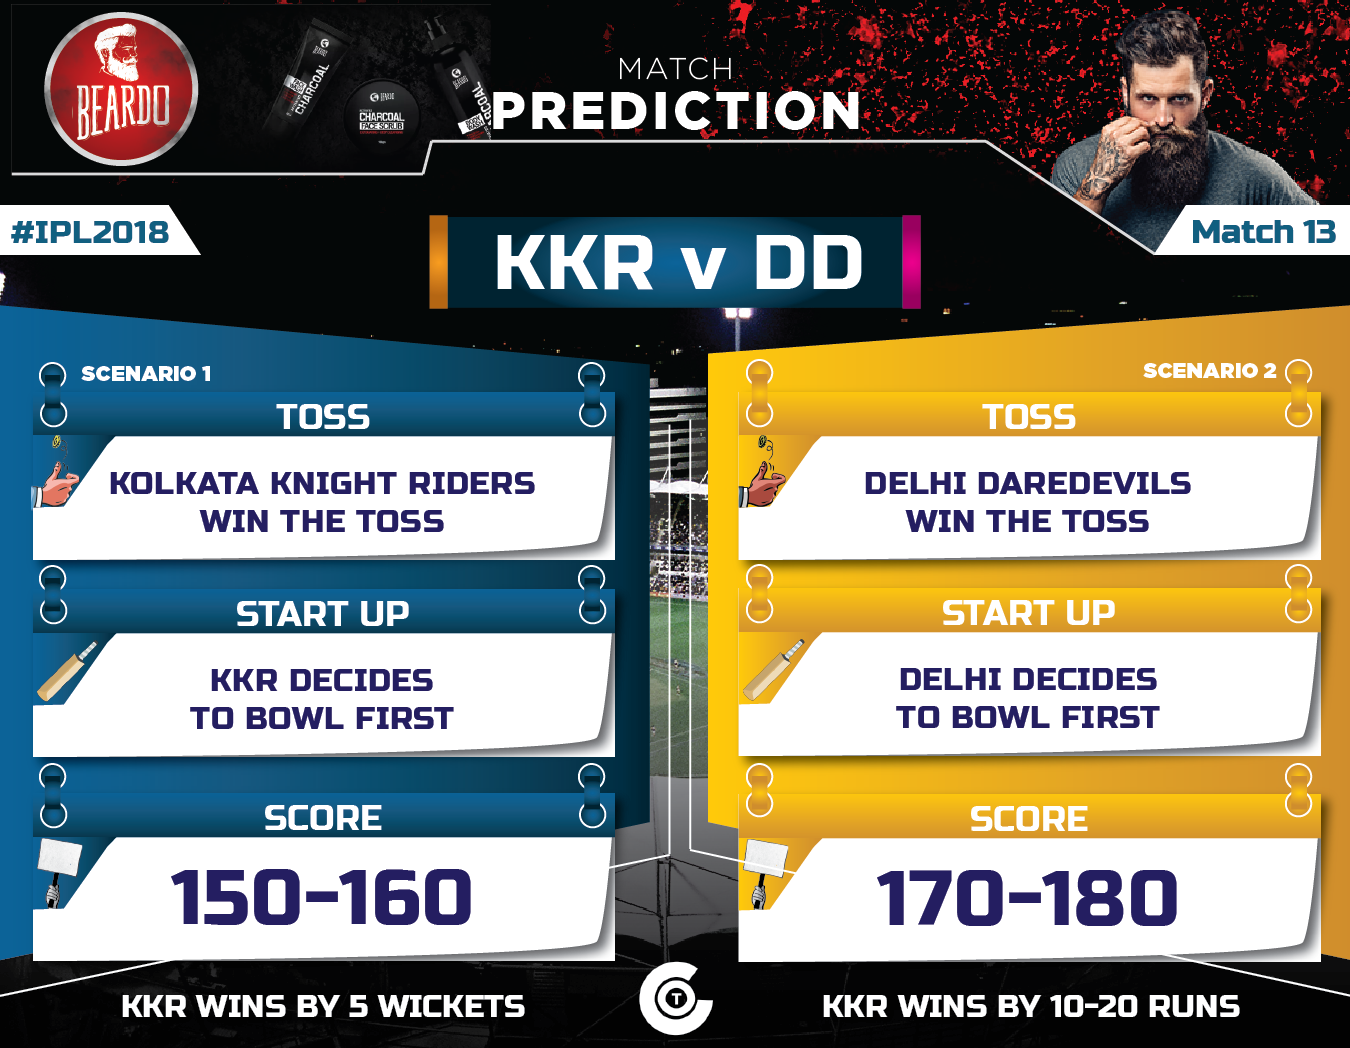 IPL-2018-Todays-match-prediction-ddvkkr-Match-13-Prediction